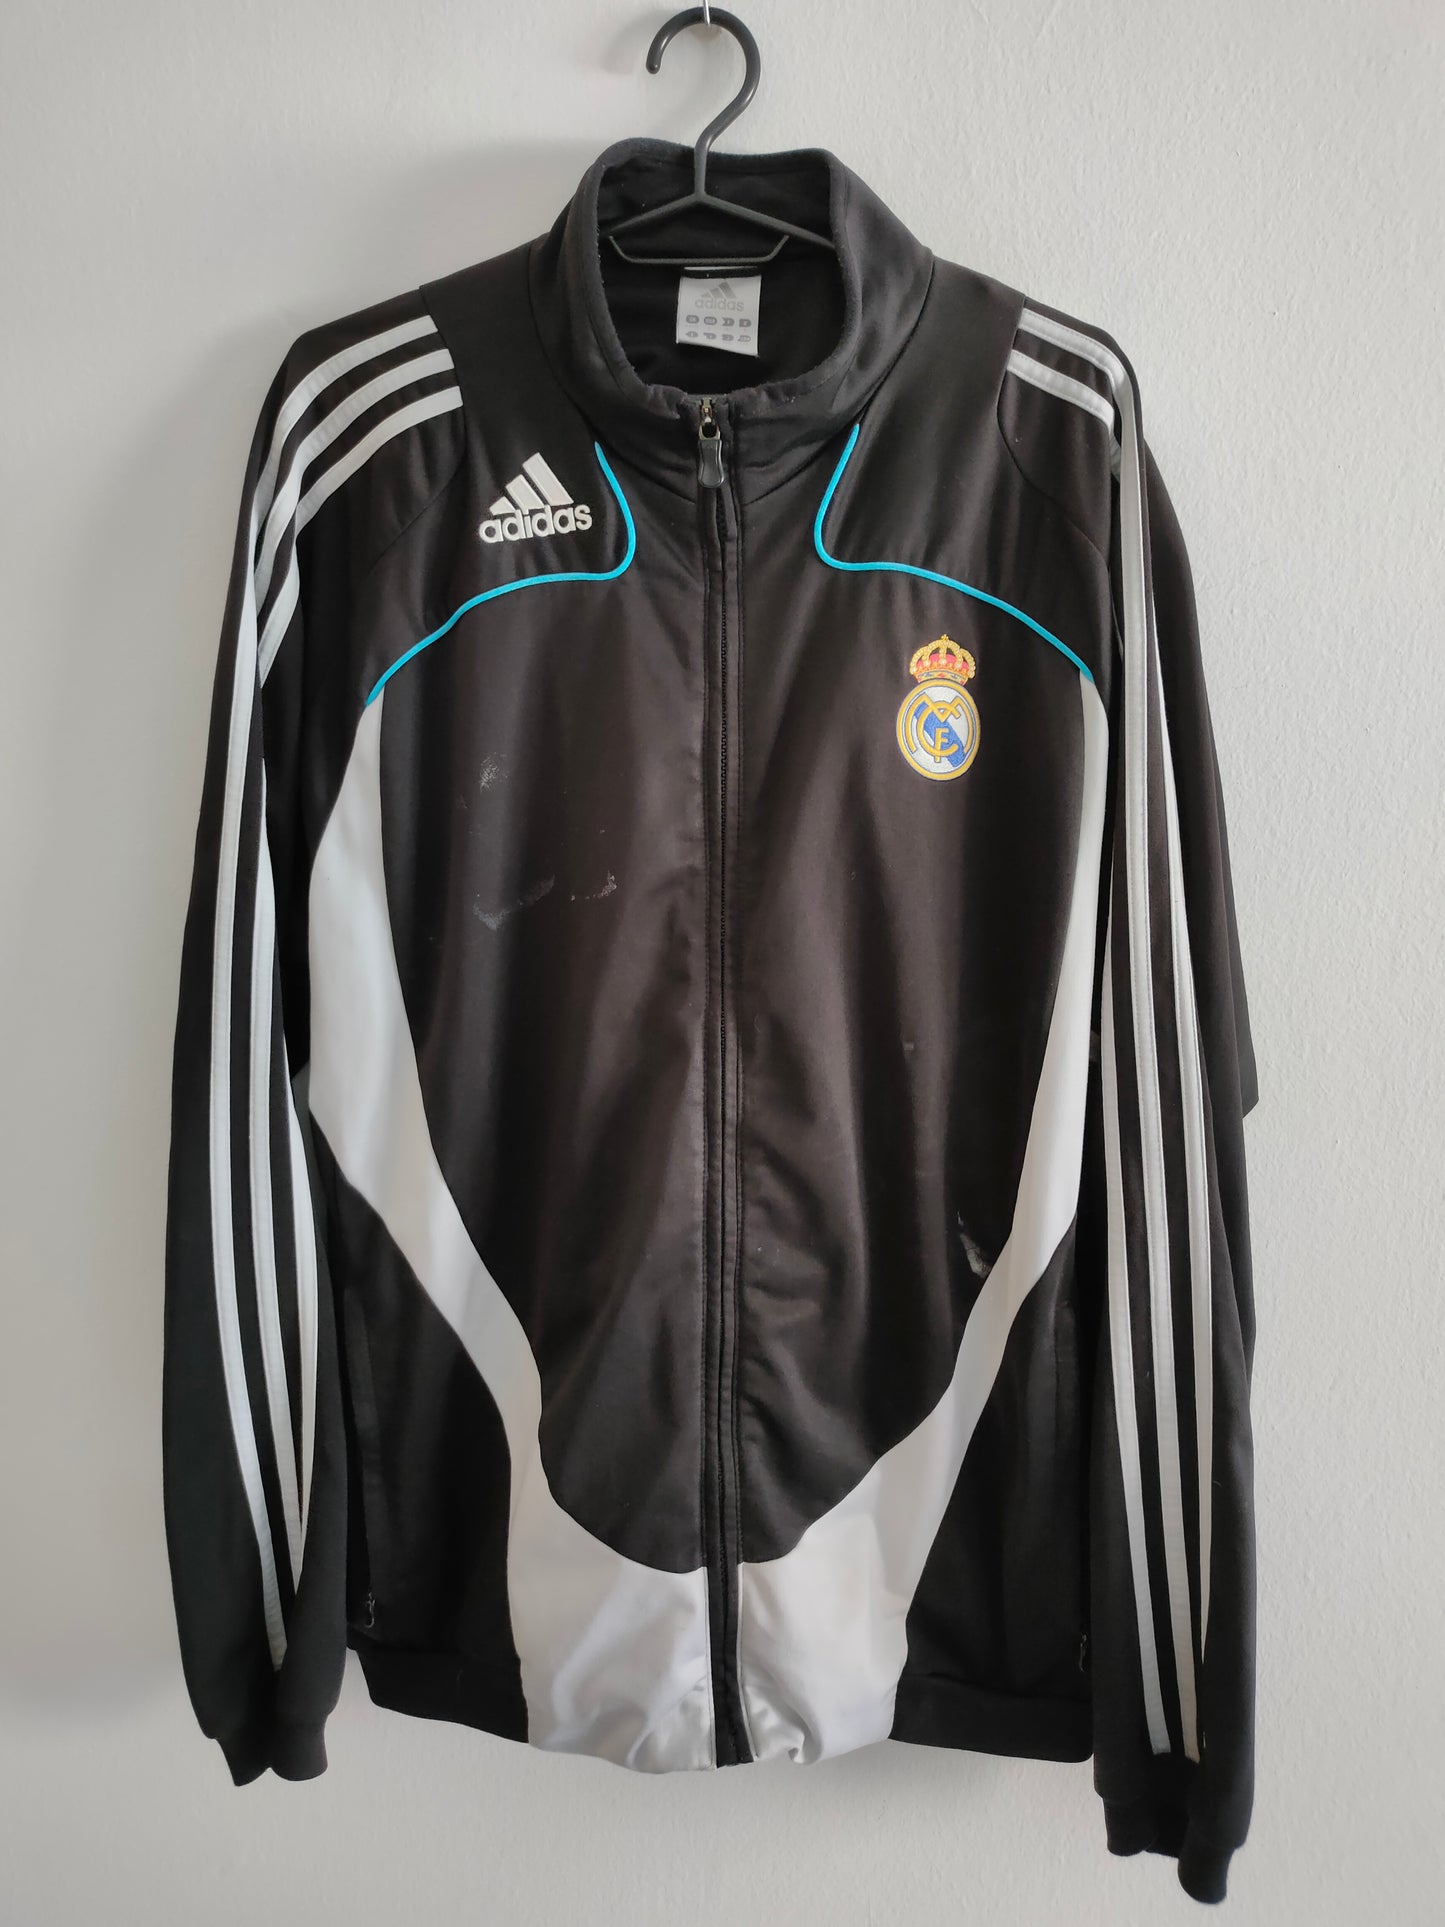 Adidas track jacket Real Madrid Oficial 00s